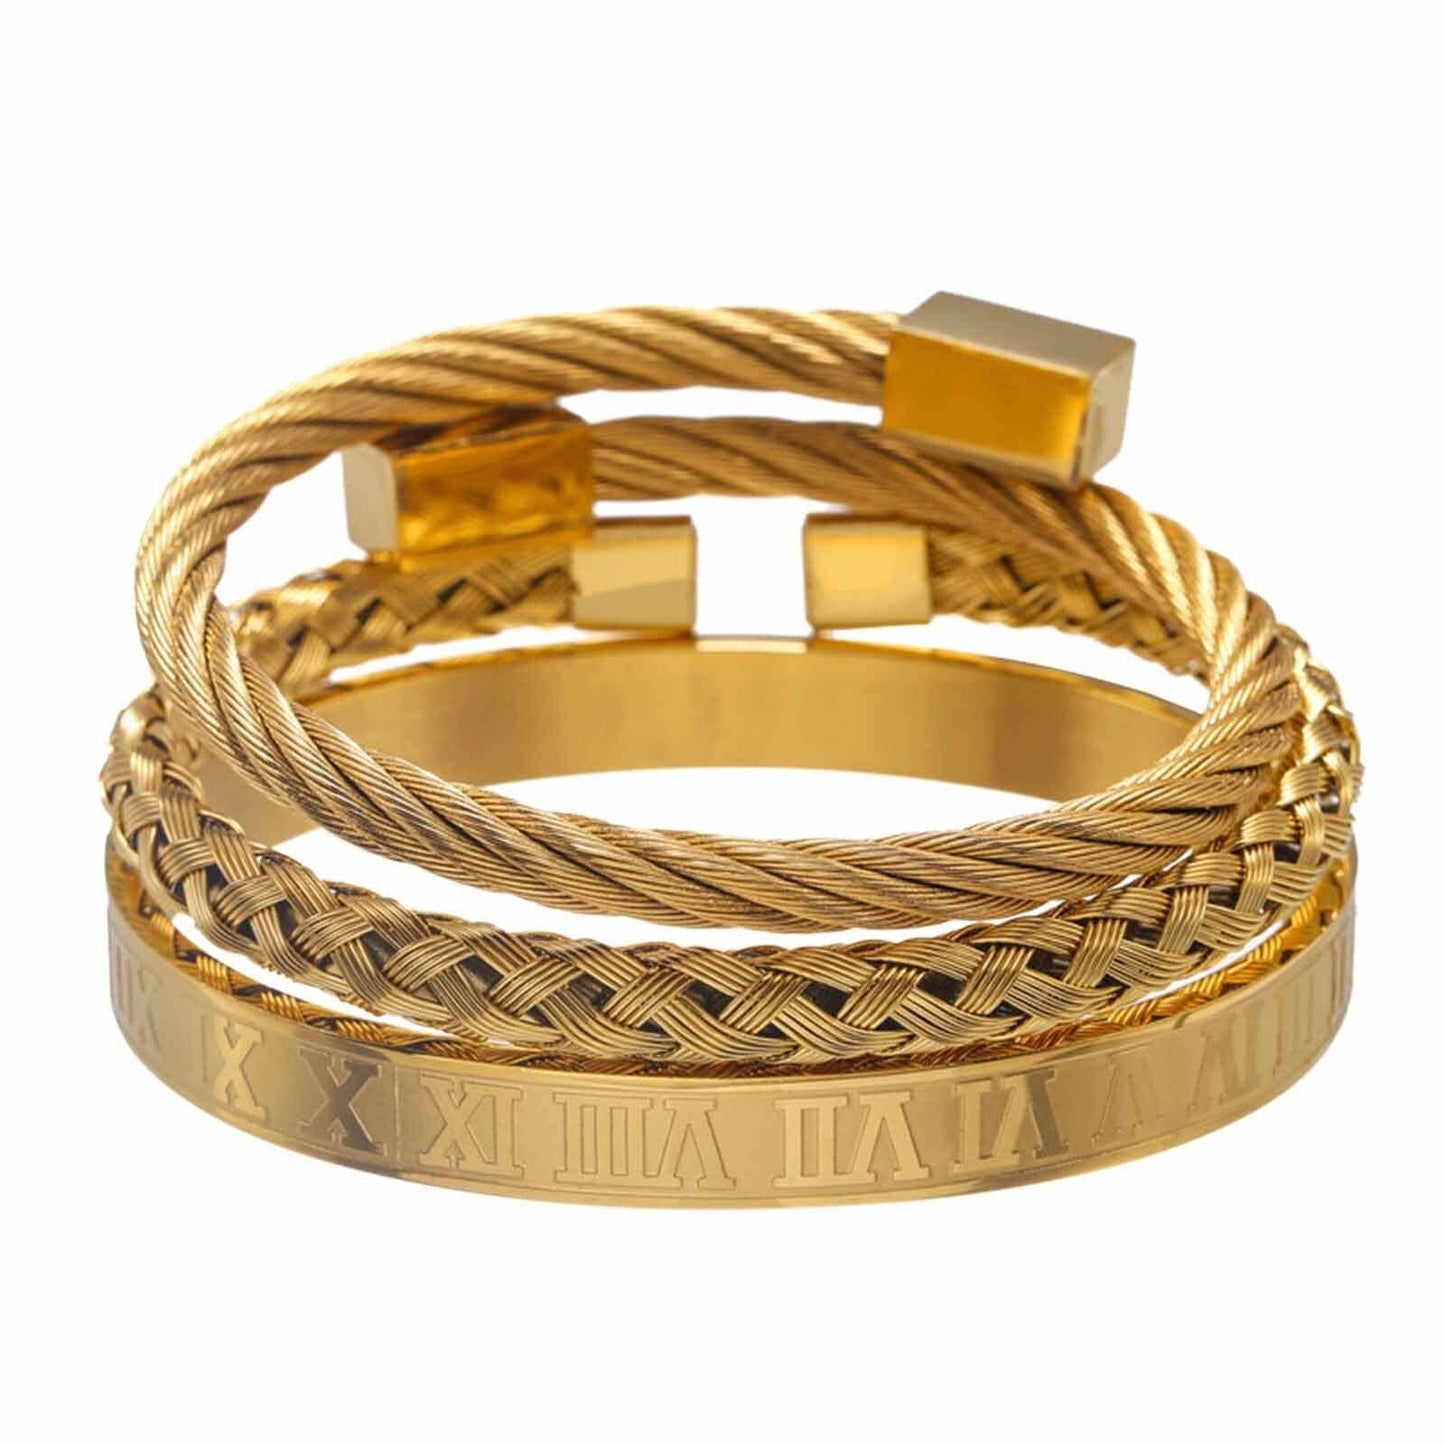 Bracelet | Man gold bracelet design, Modern gold jewelry, Mens bracelet gold  jewelry